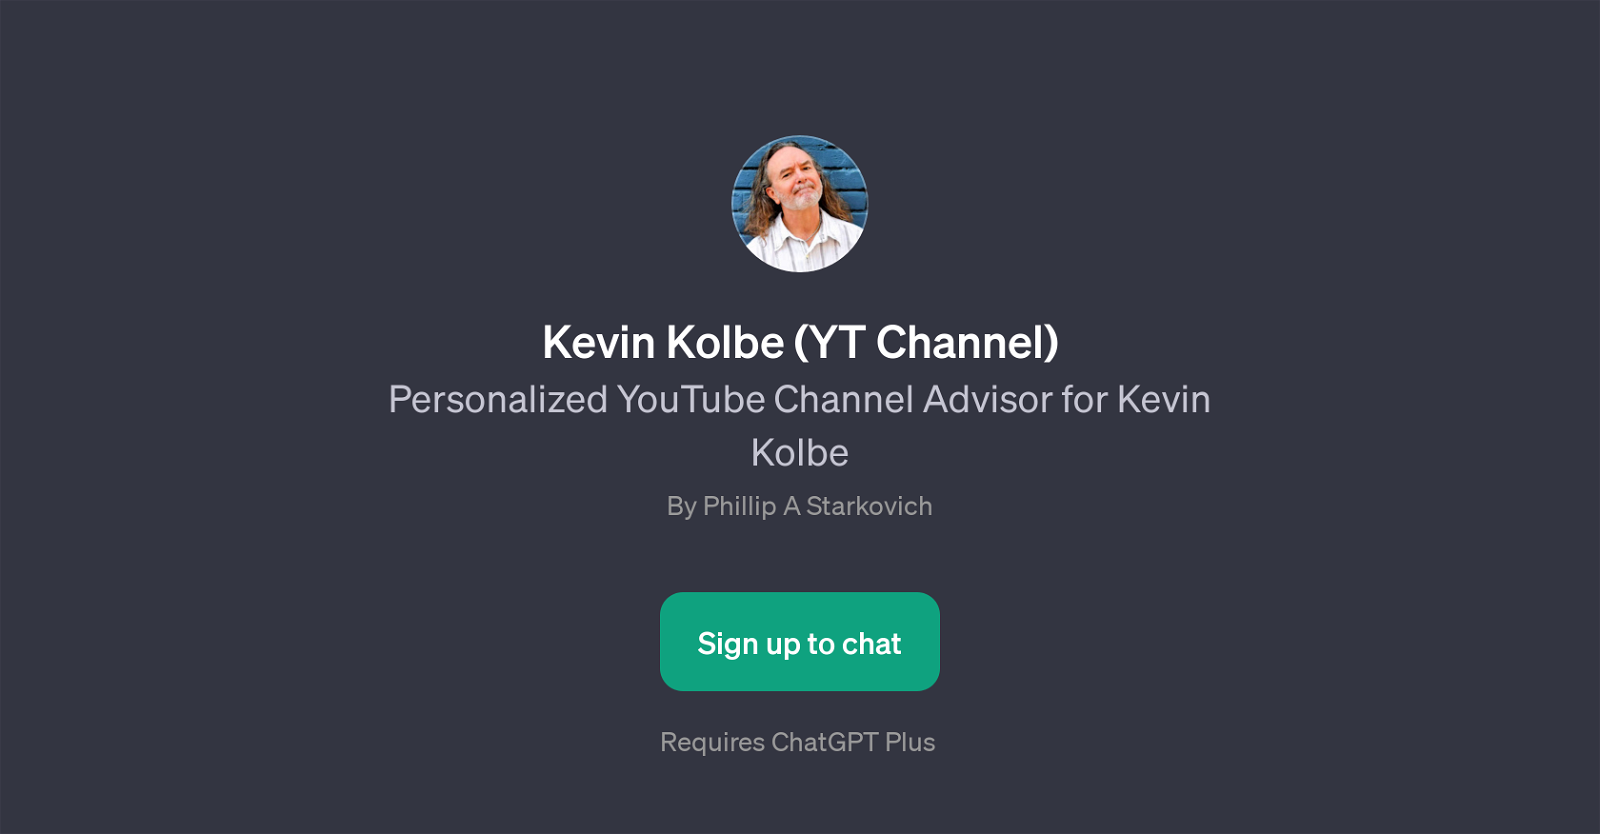 Kevin Kolbe (YT Channel) website